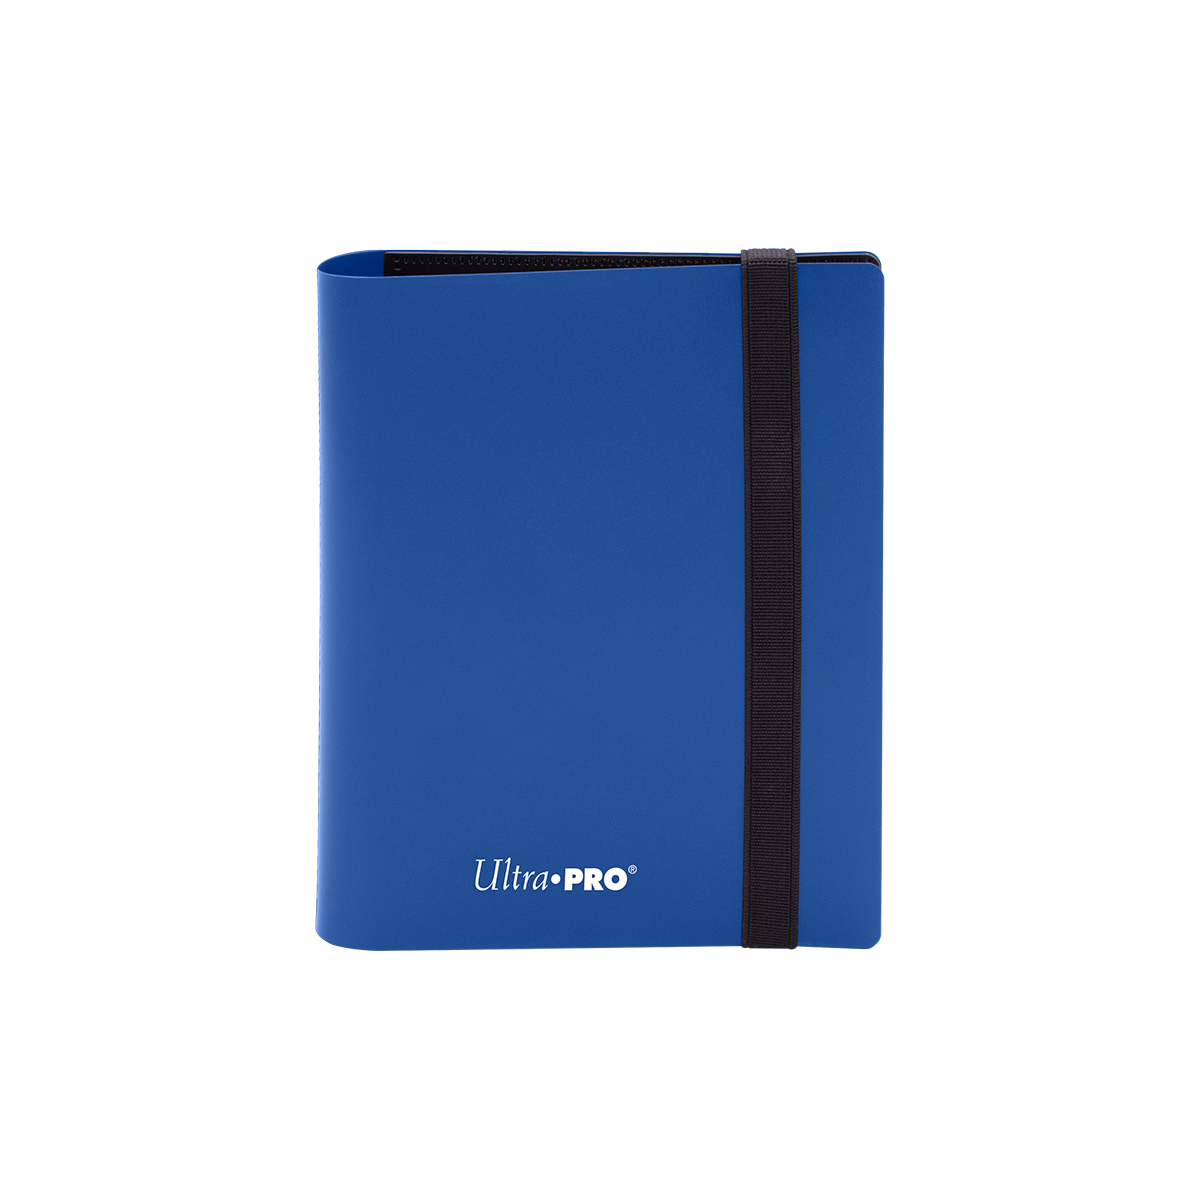 2-Pocket Ultra Pro Eclipse Binder - Pacific Blue